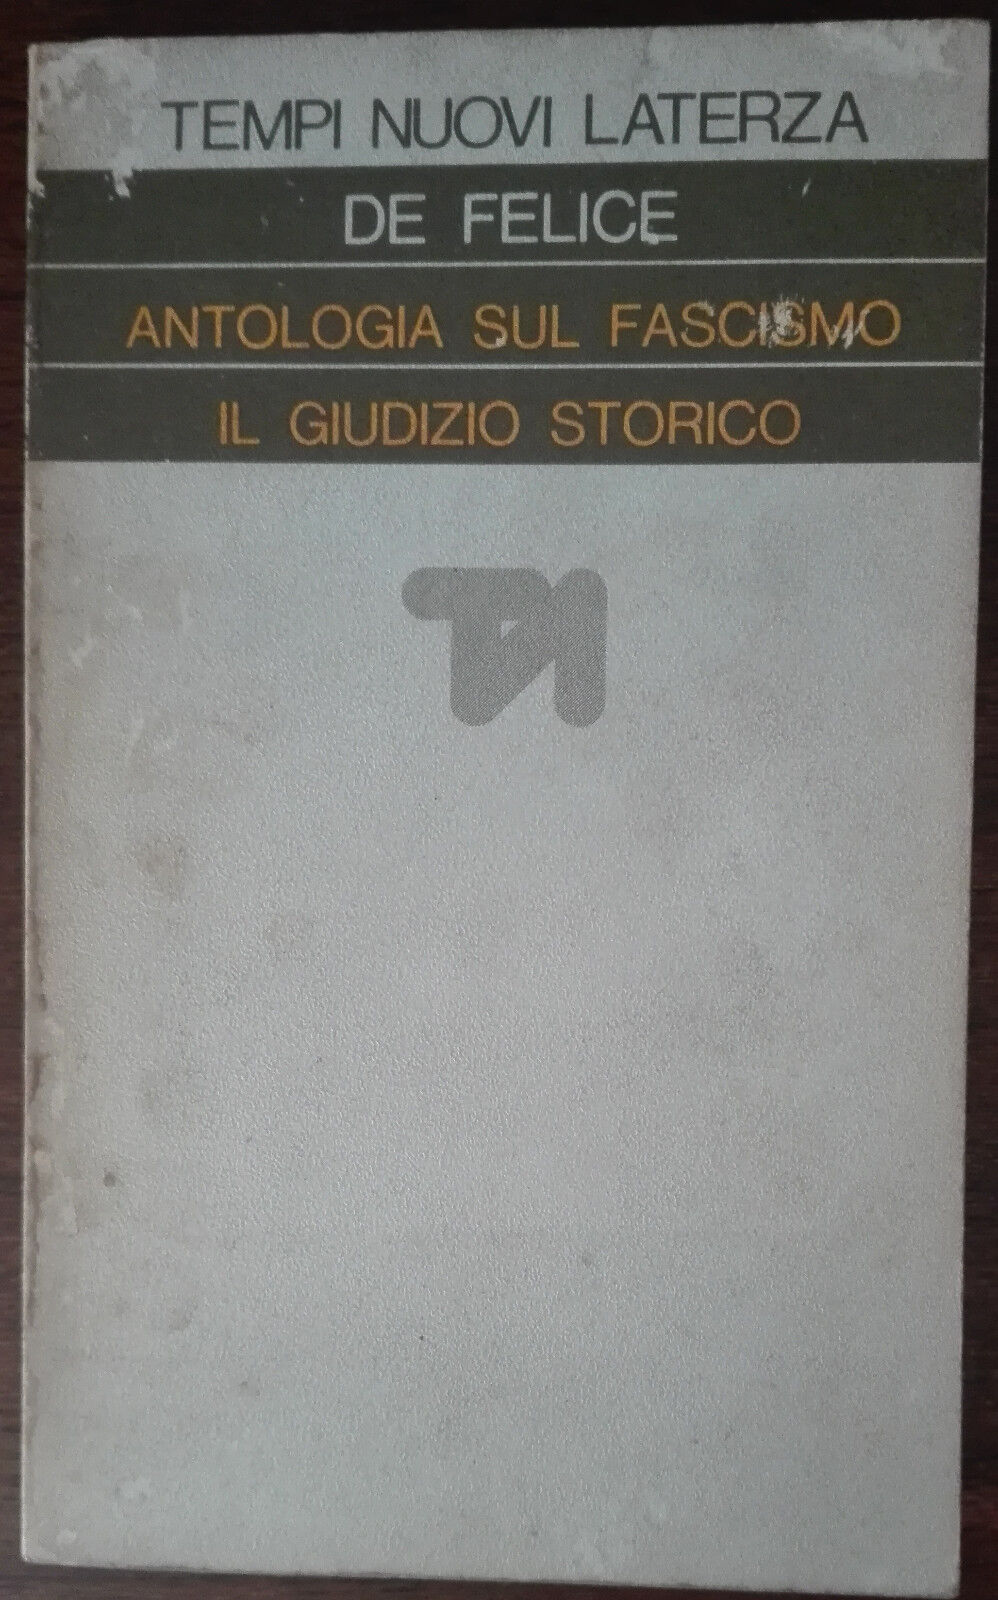 Antologia sul fascimo - De Felice - Laterza,1977 - A